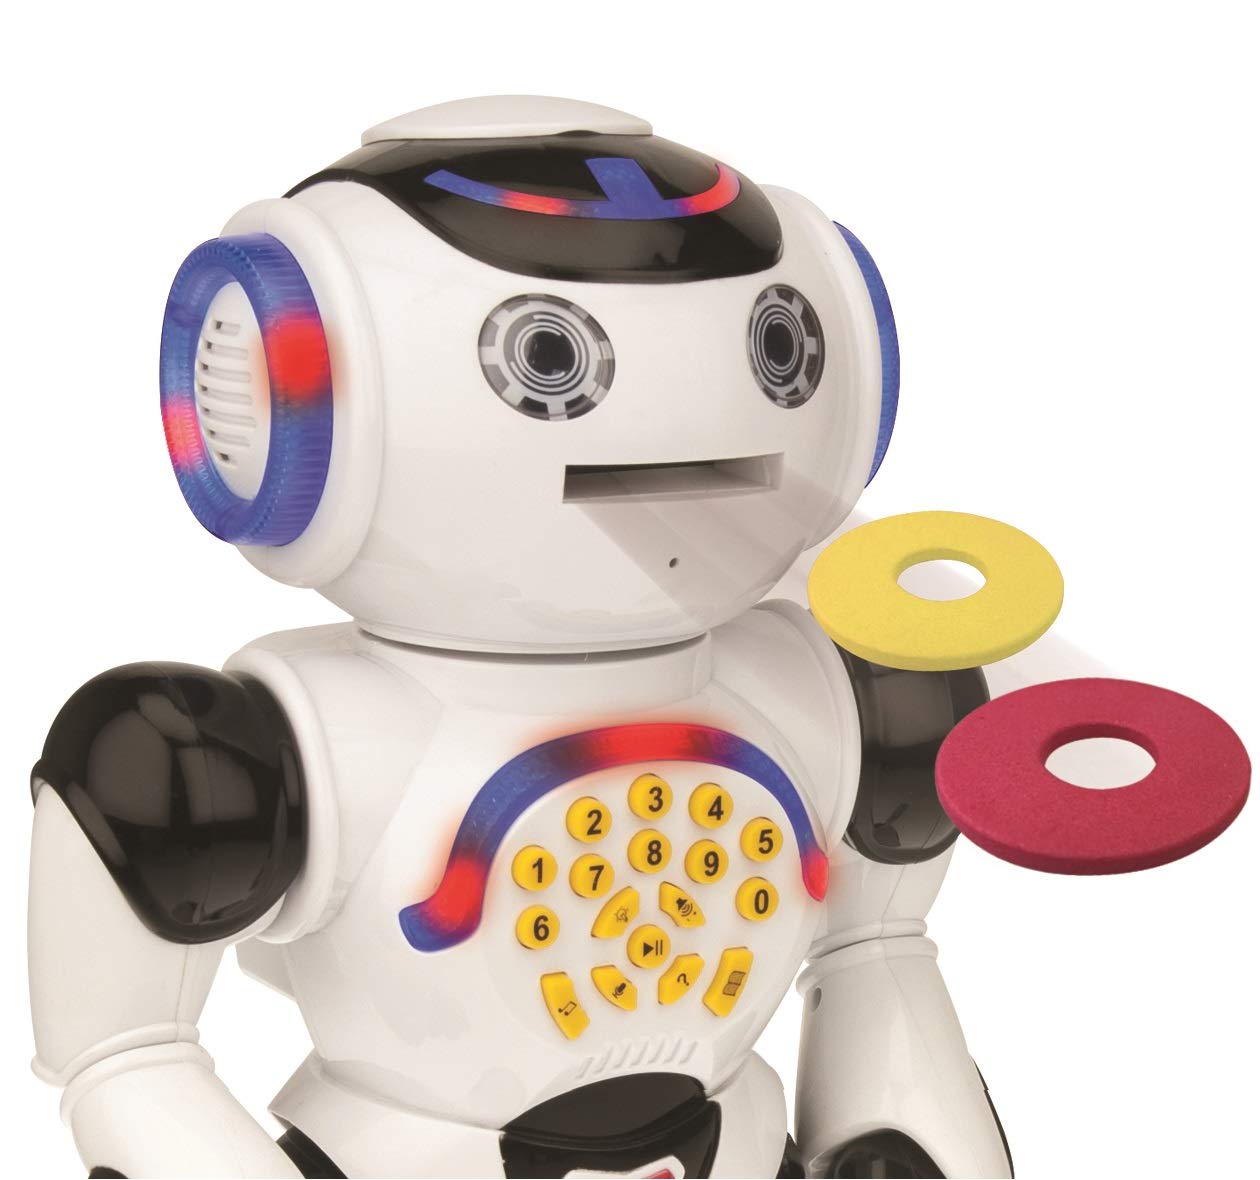 LEXiBOOK, Powerman Remote Control Walking Talking Toy Robot, Educational Robot, Dances, Sings, Reads Stories, Math Quiz, Shooting Discs, & Voice Mimicking, Black, White, ROB50EN